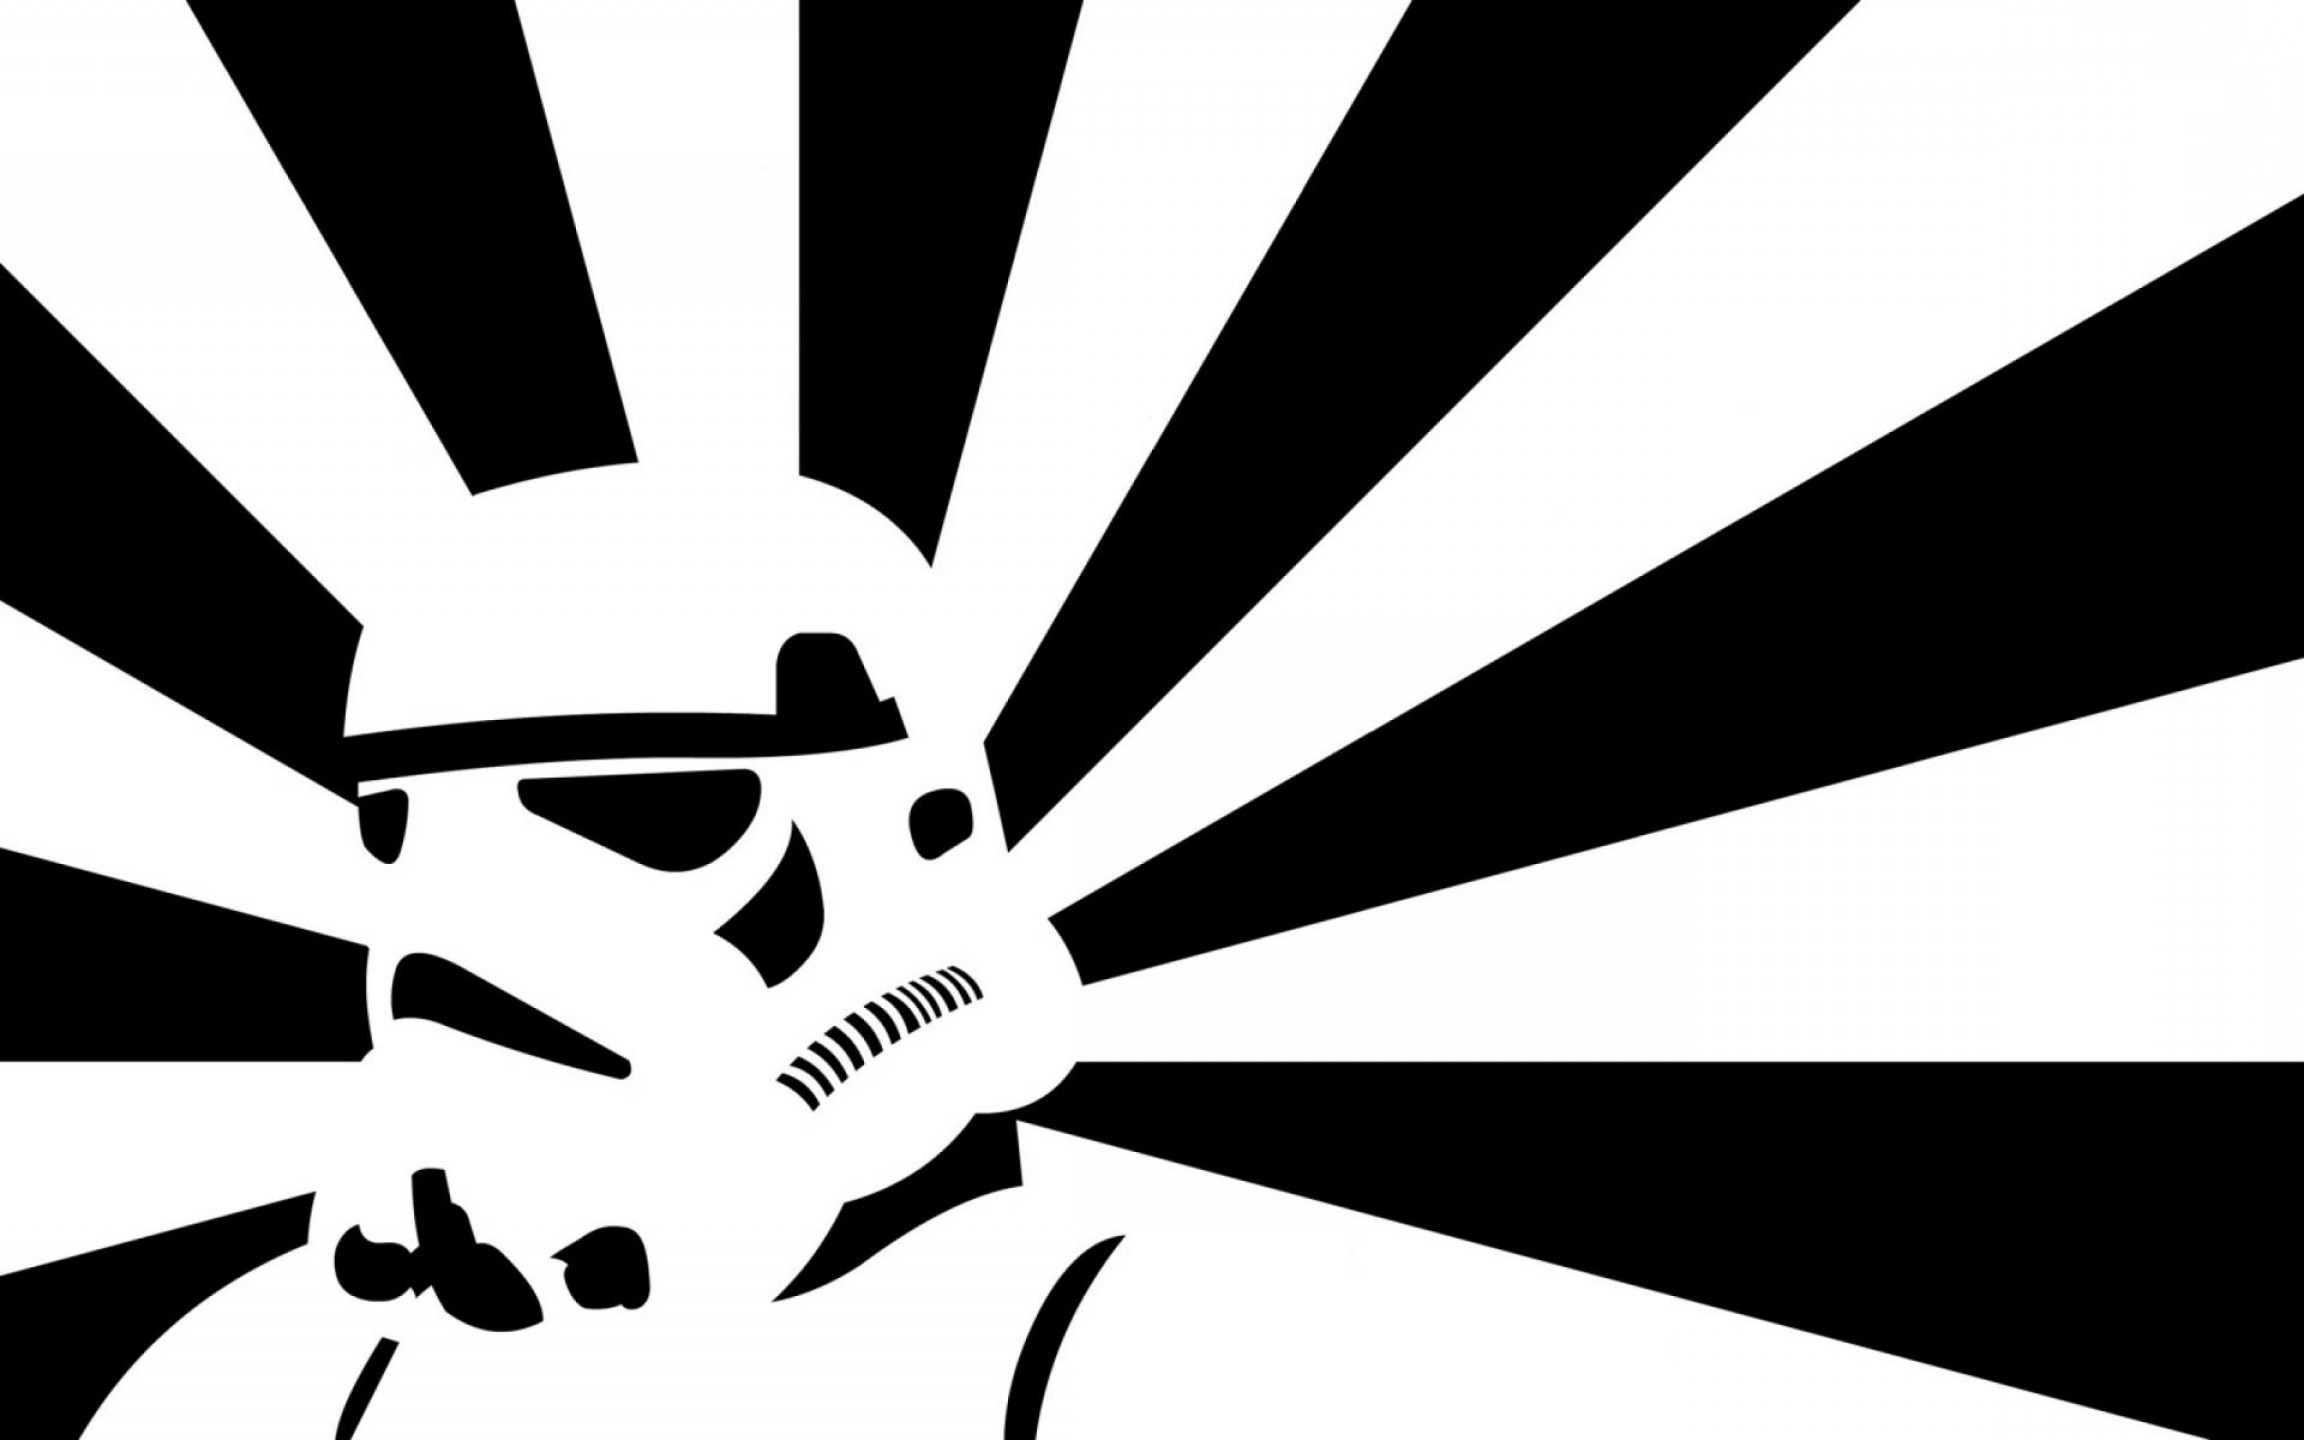 2304x1440 Star Wars Stormtrooper Vector: Star Wars Stormtroopers Vector Stormtrooper  Wallpaper